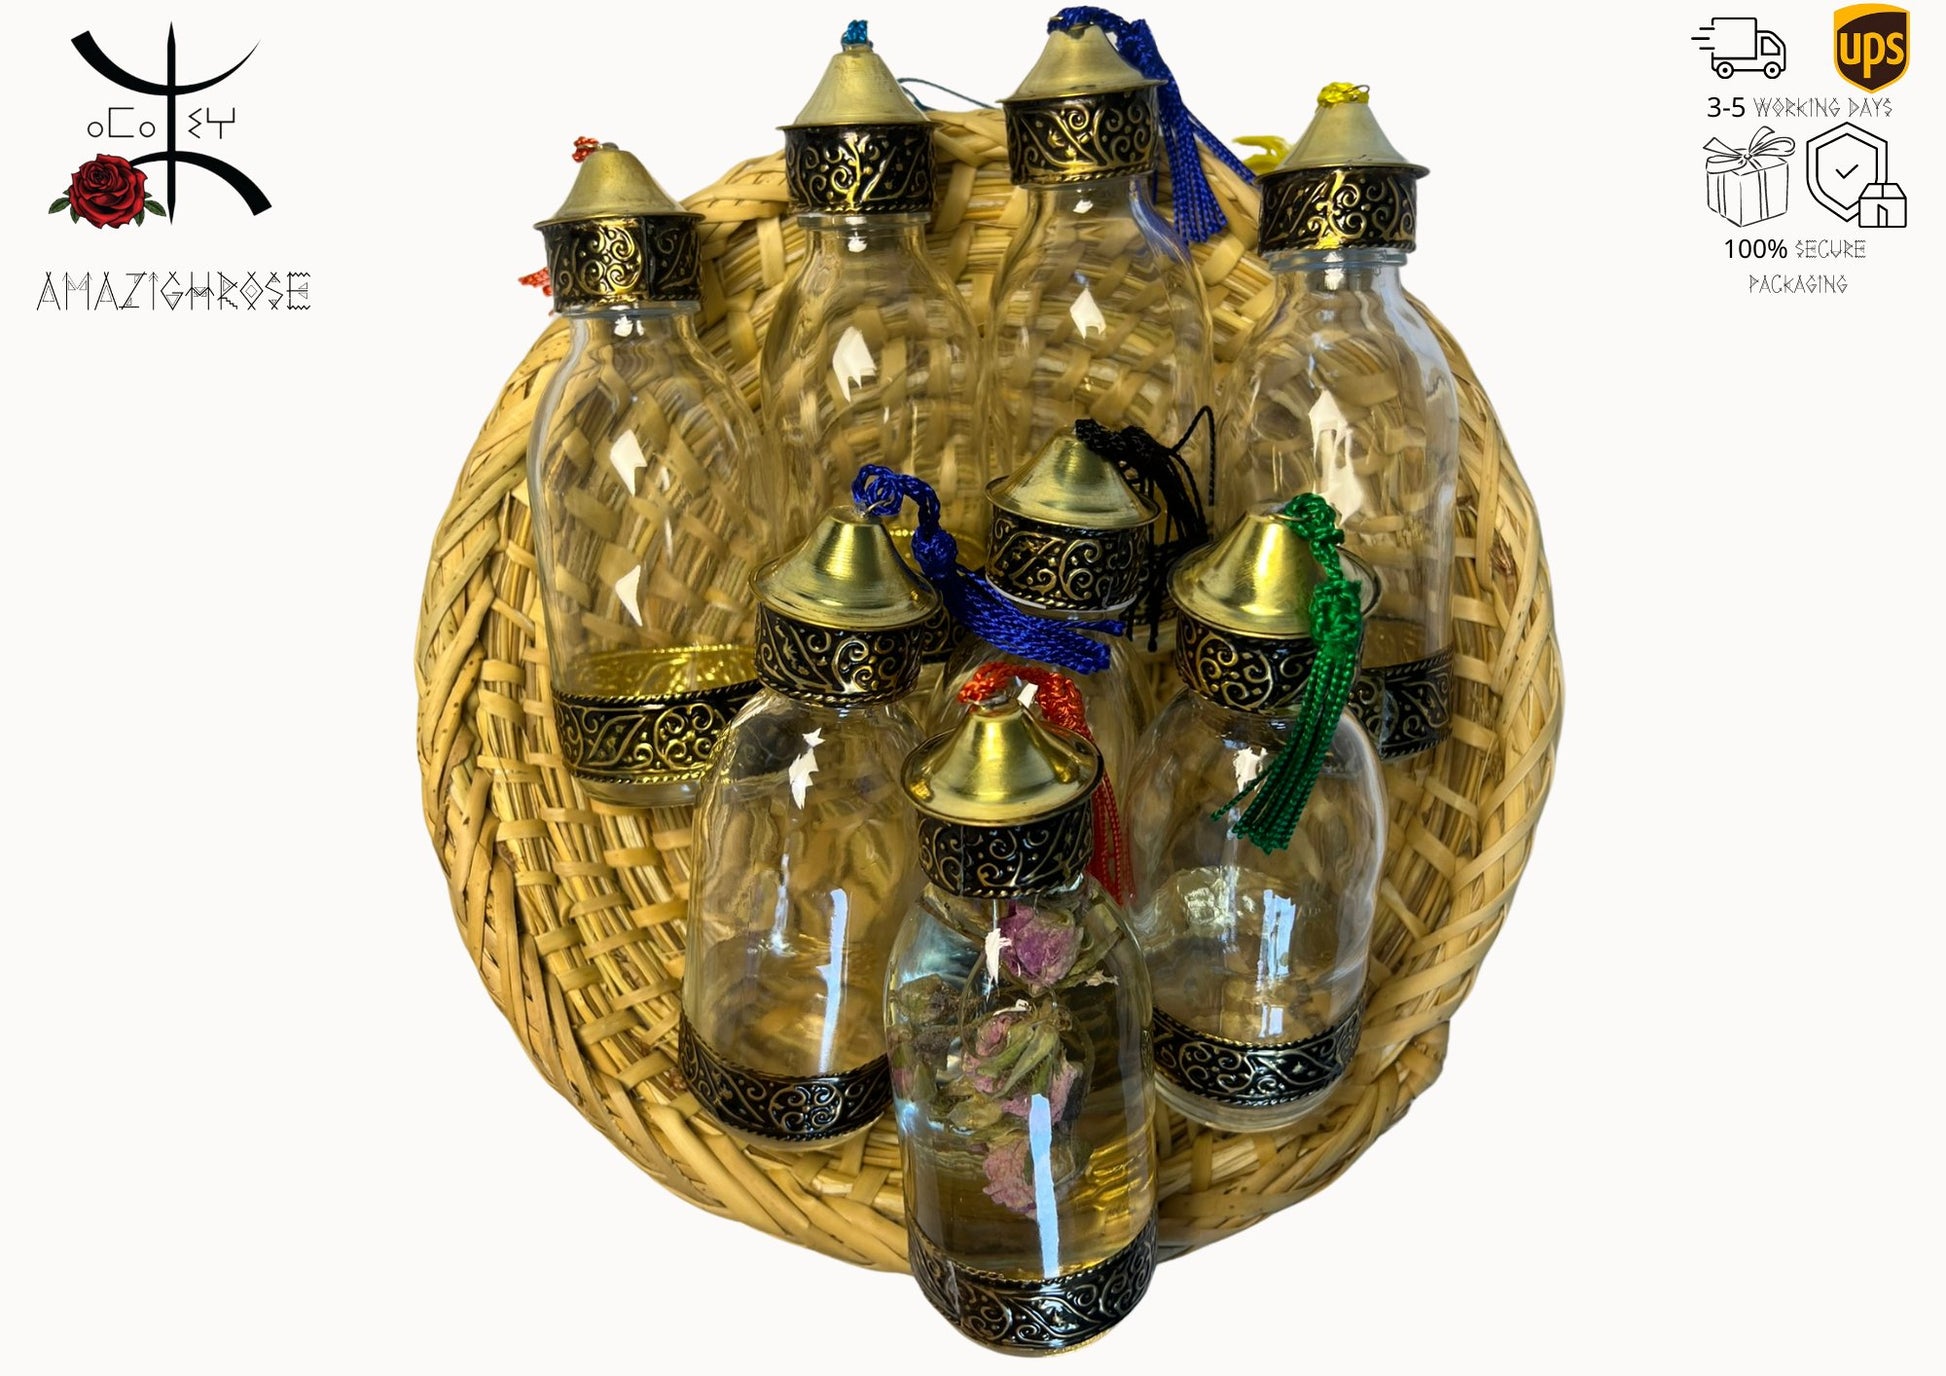 Amazighrose Marrakech Jar with Tassel - Amazighrose